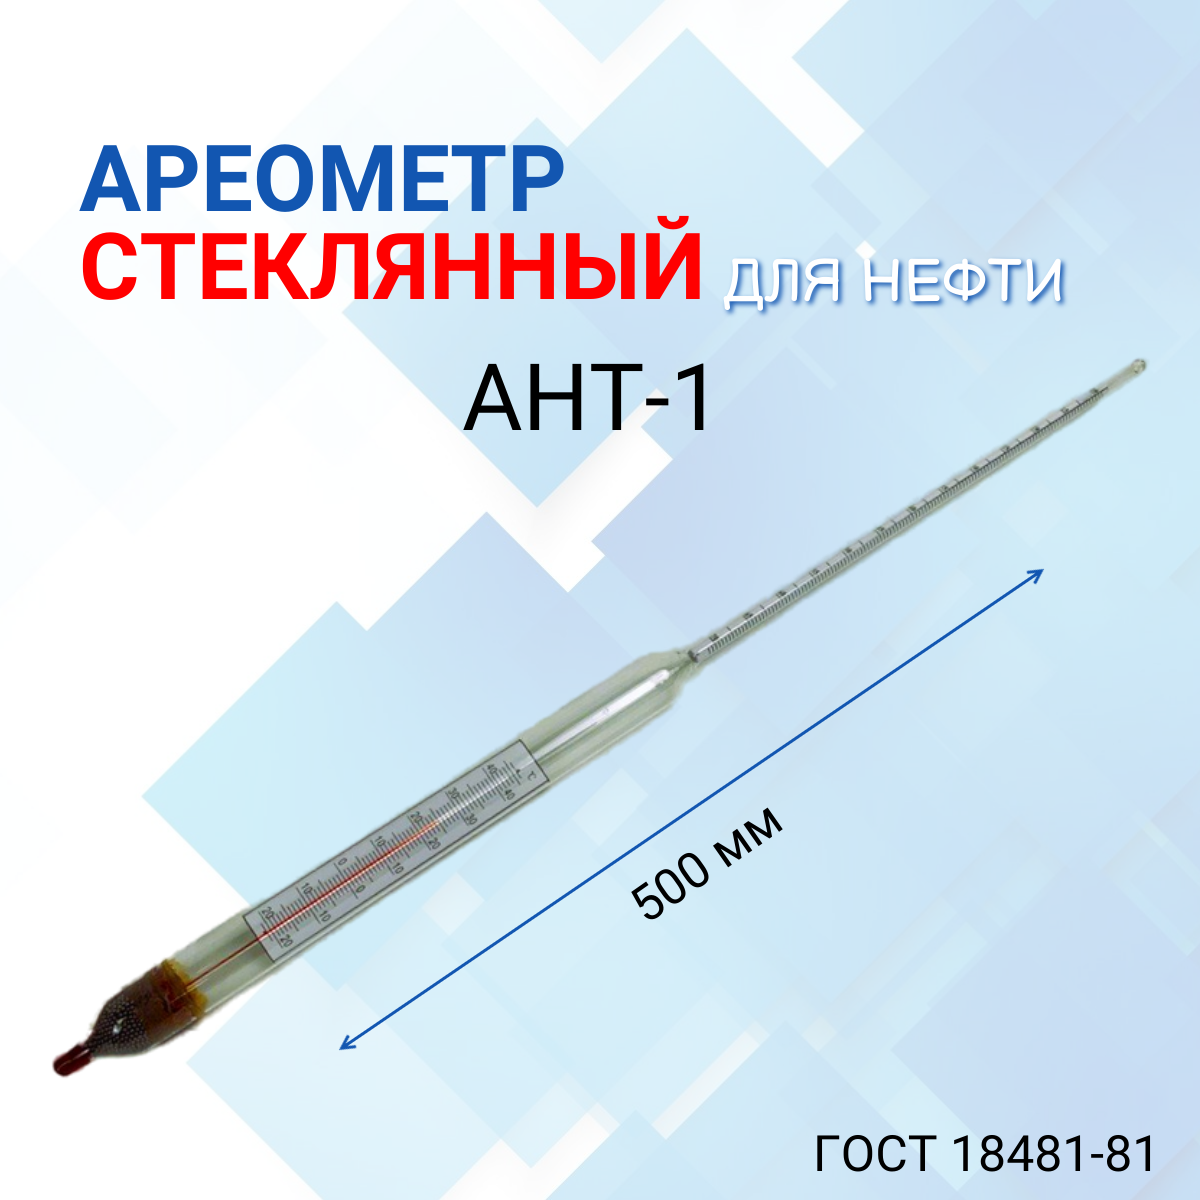 Ареометр "АНТ-1" 830-890 с поверкой РФ